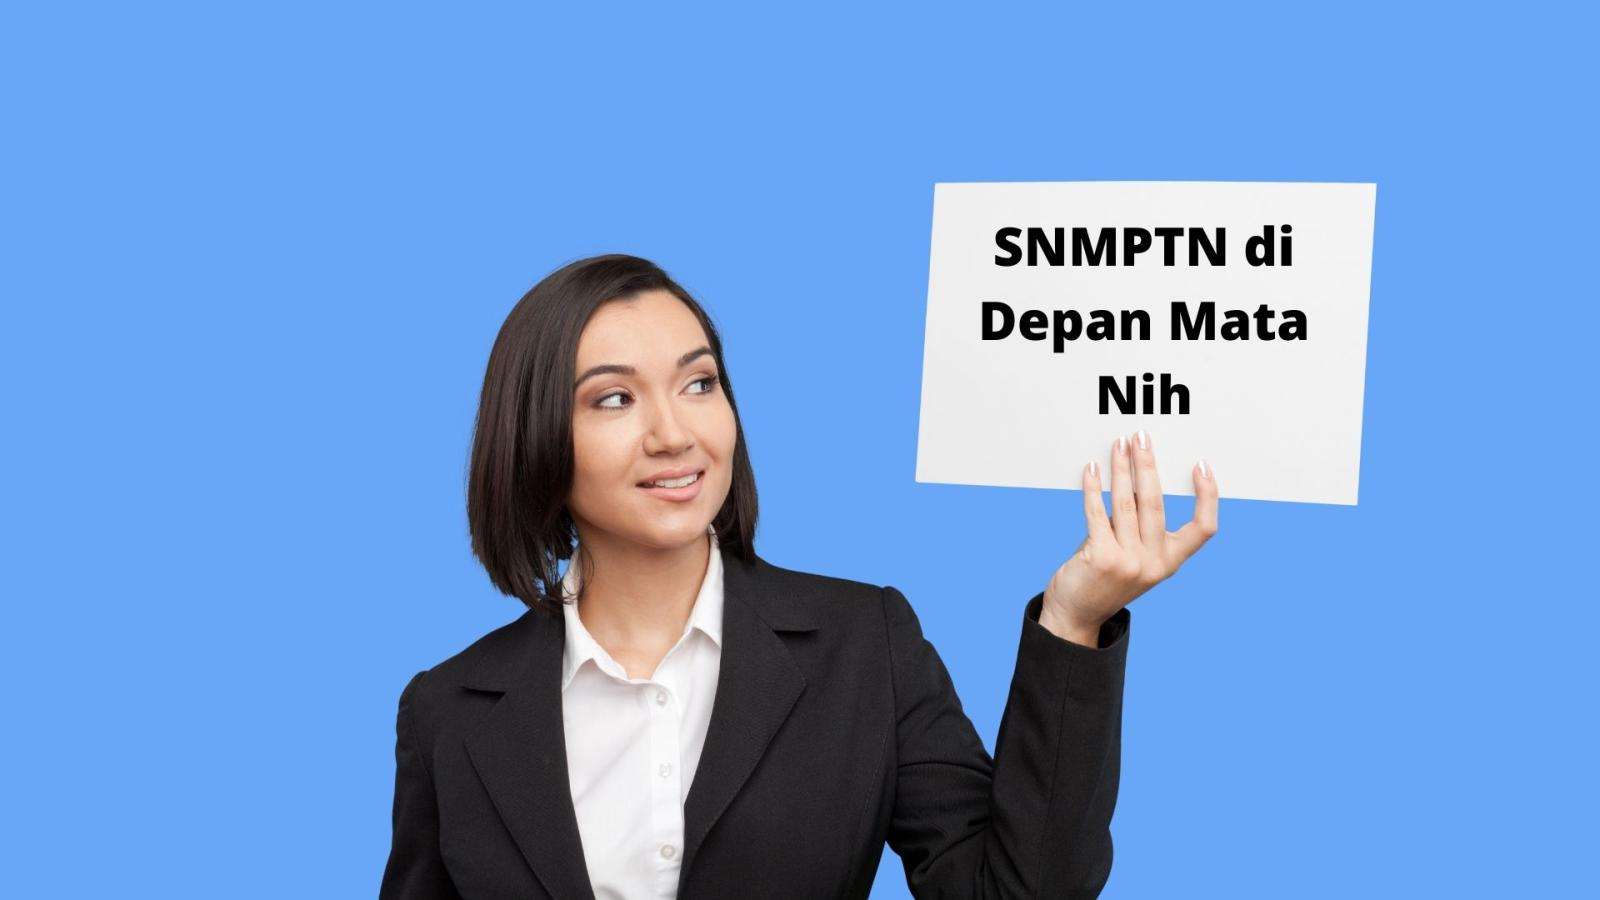 Jadwal Pendaftaran SNMPTN 2022